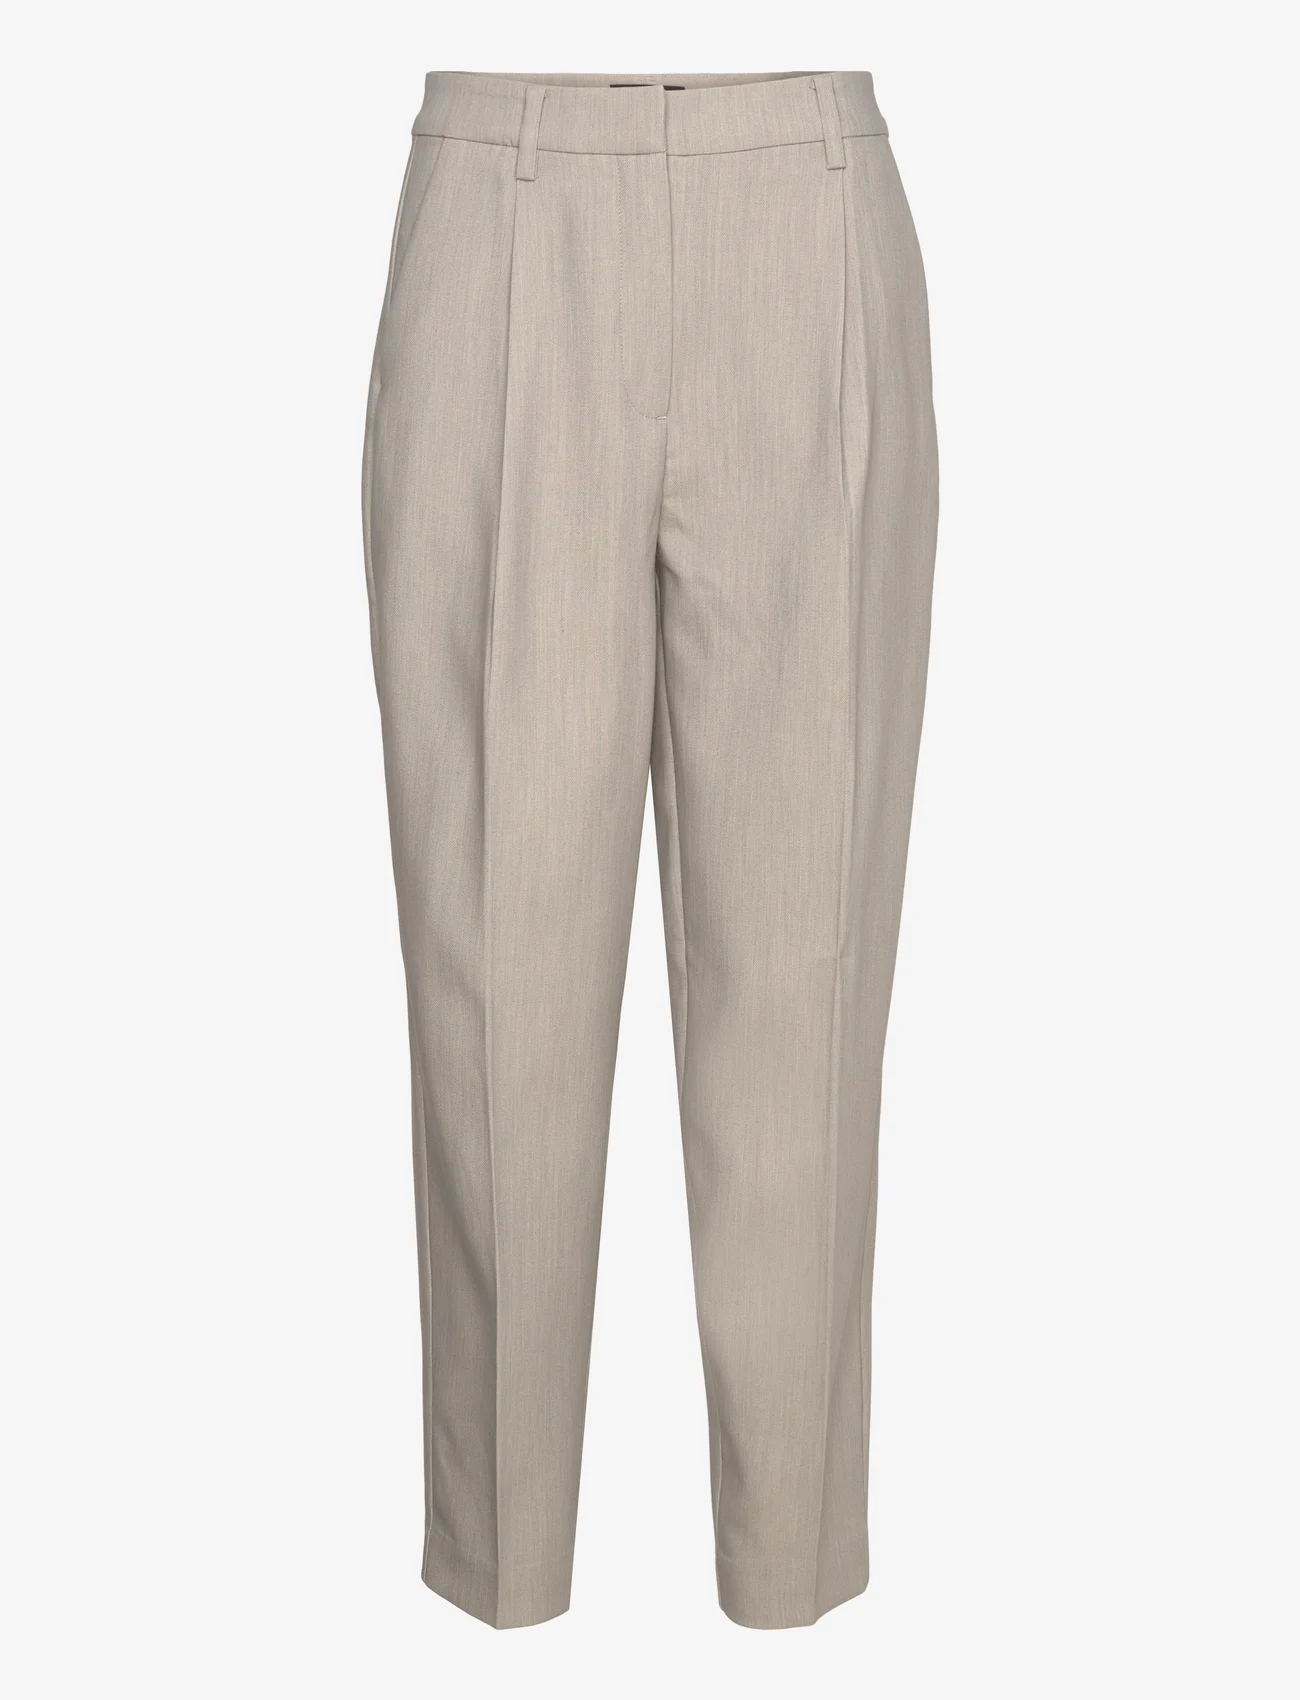 Bruuns Bazaar - CindySusBBDagny pants - festmode zu outlet-preisen - light grey melange - 0